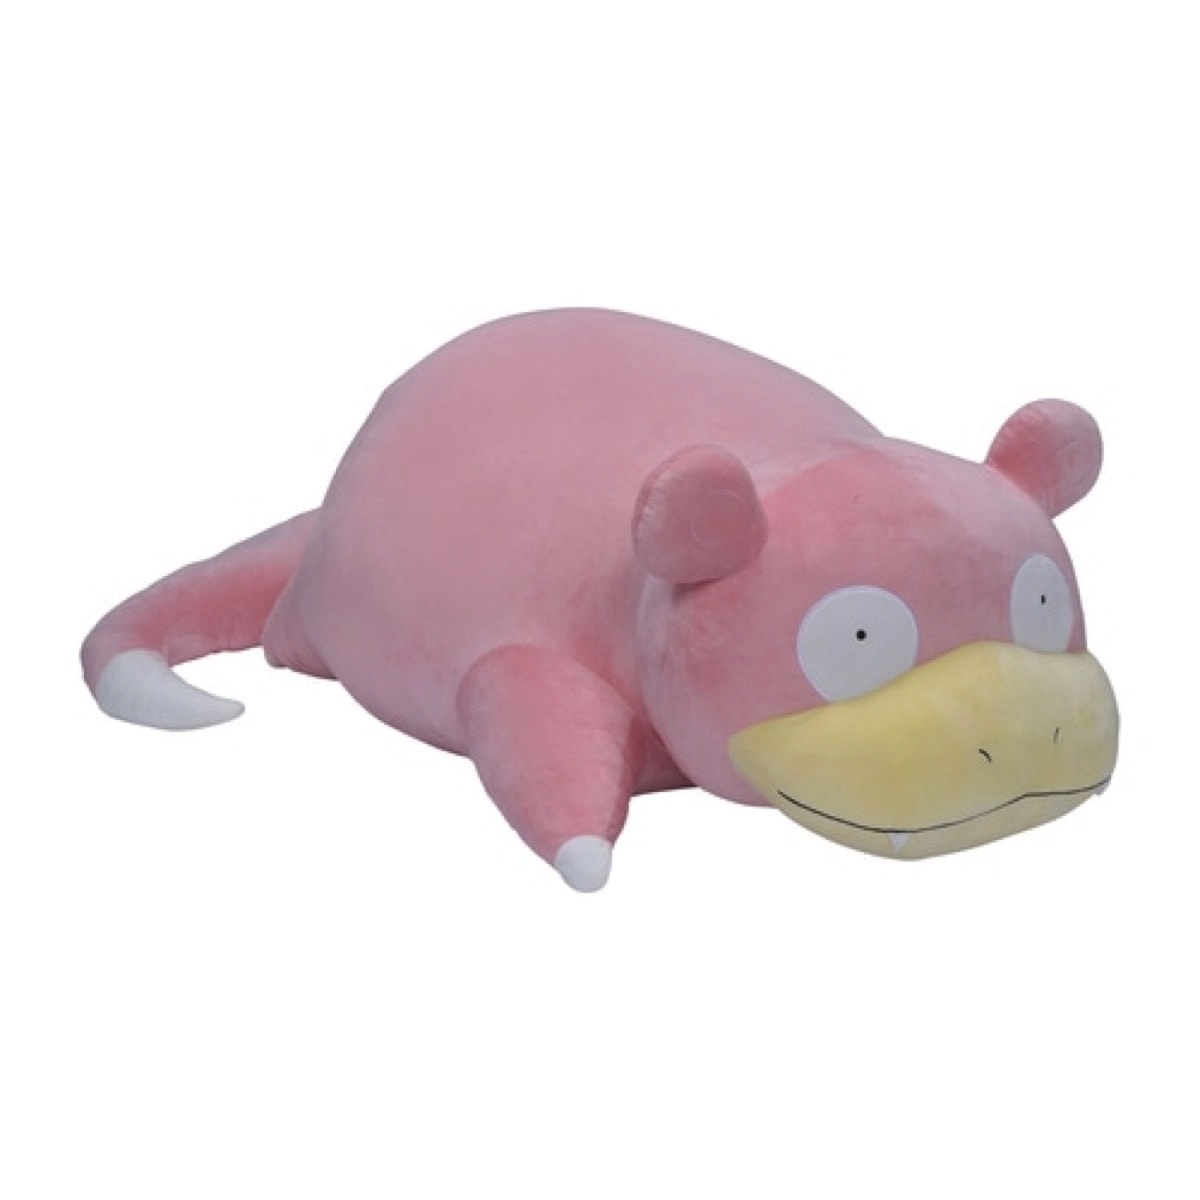 Pokémon 推出 1:1 尺寸「呆呆獸 Slowpoke」全新毛絨玩偶